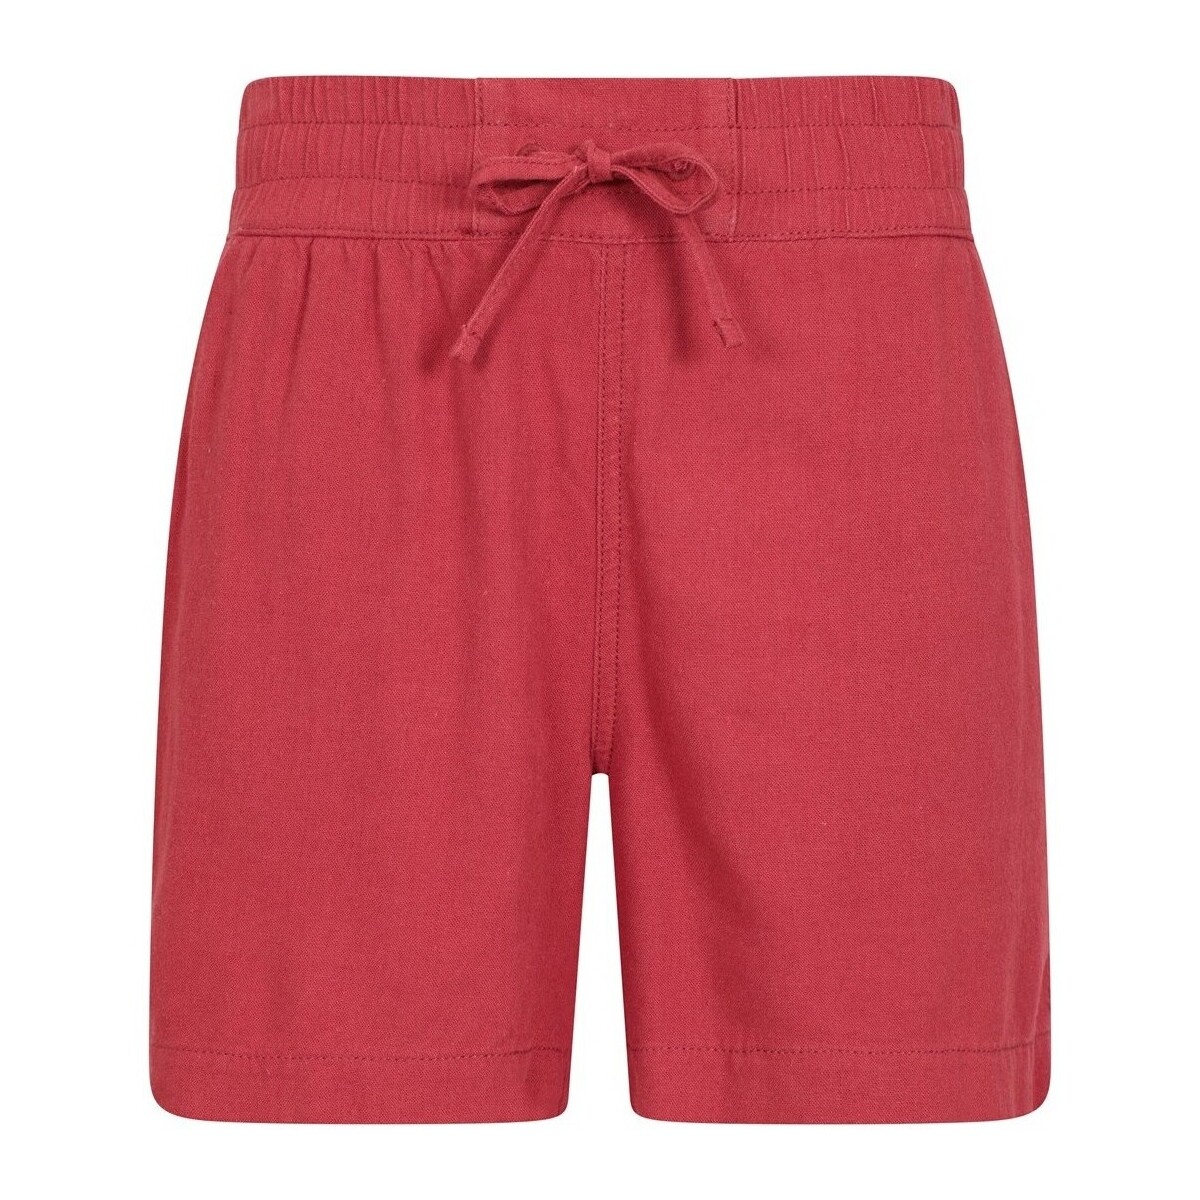 textil Mujer Shorts / Bermudas Mountain Warehouse MW325 Multicolor